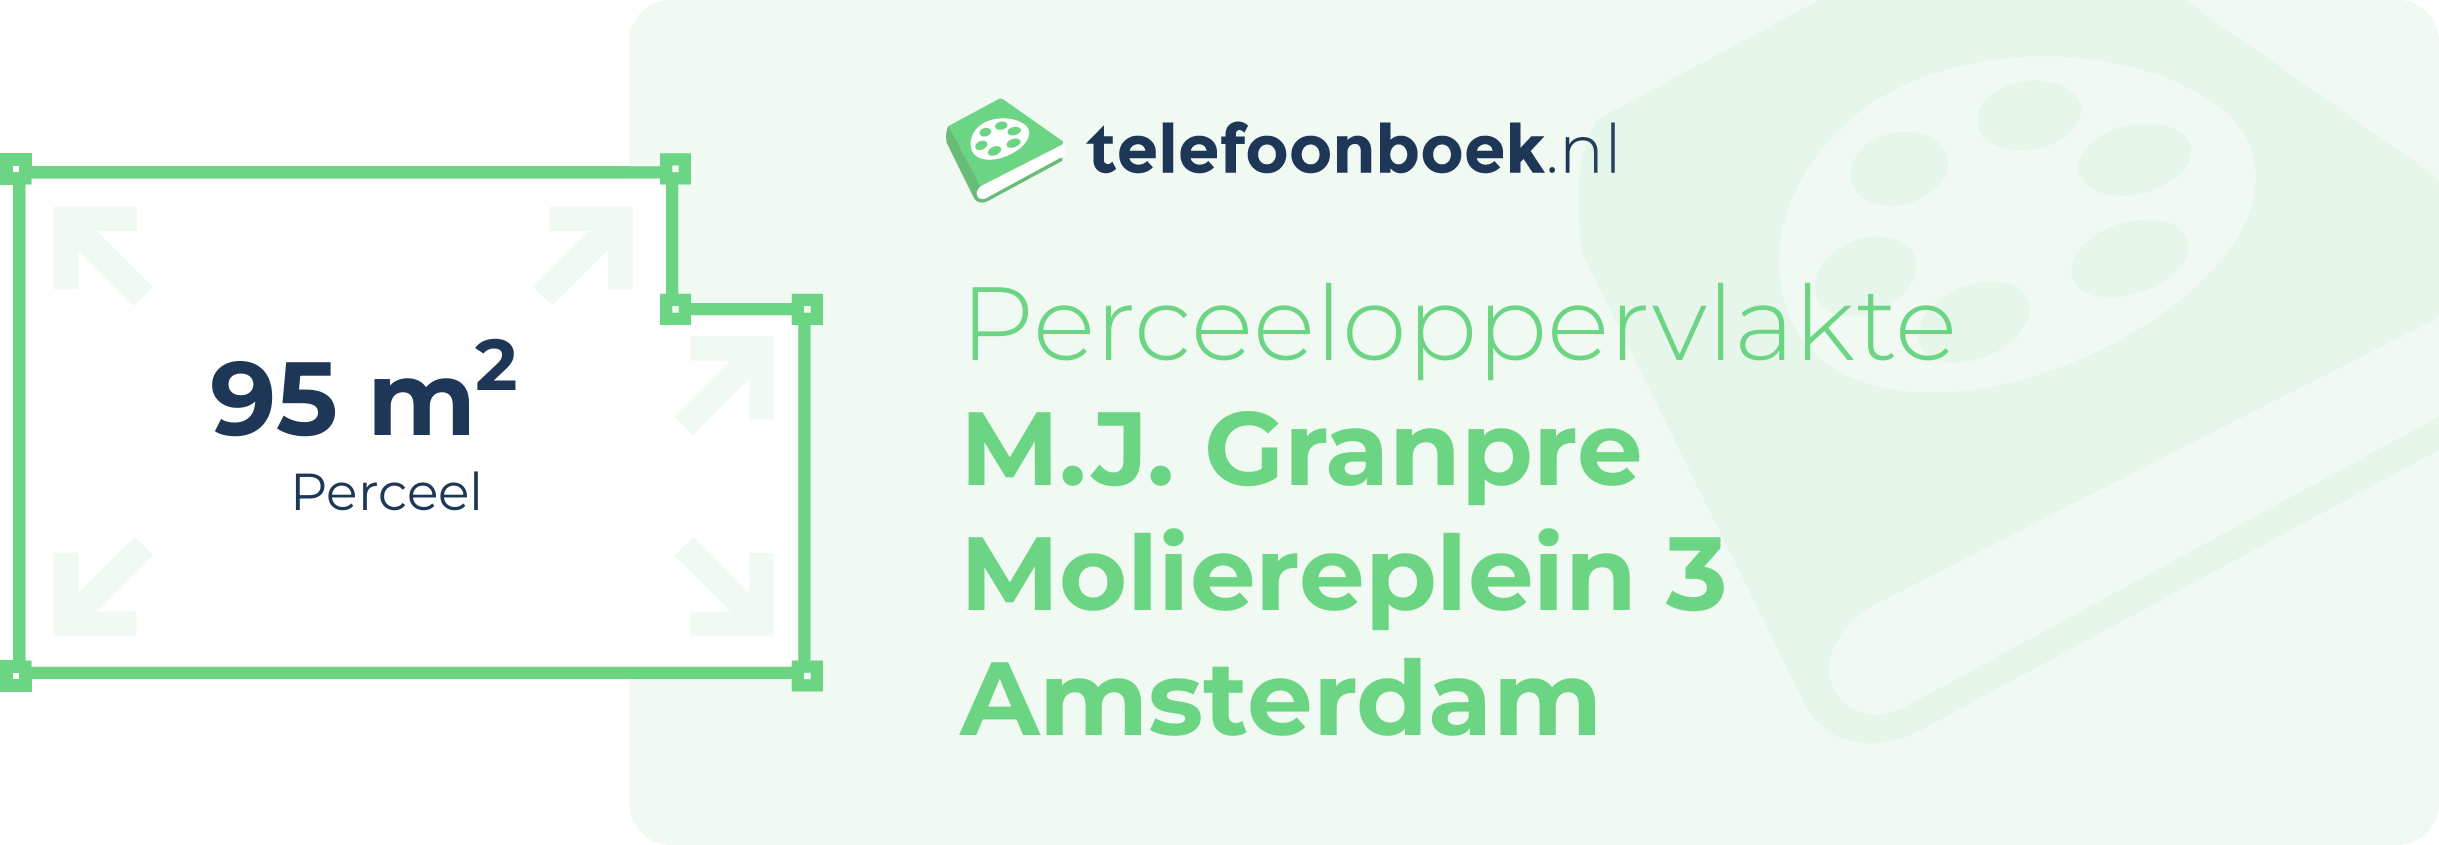 Perceeloppervlakte M.J. Granpre Moliereplein 3 Amsterdam